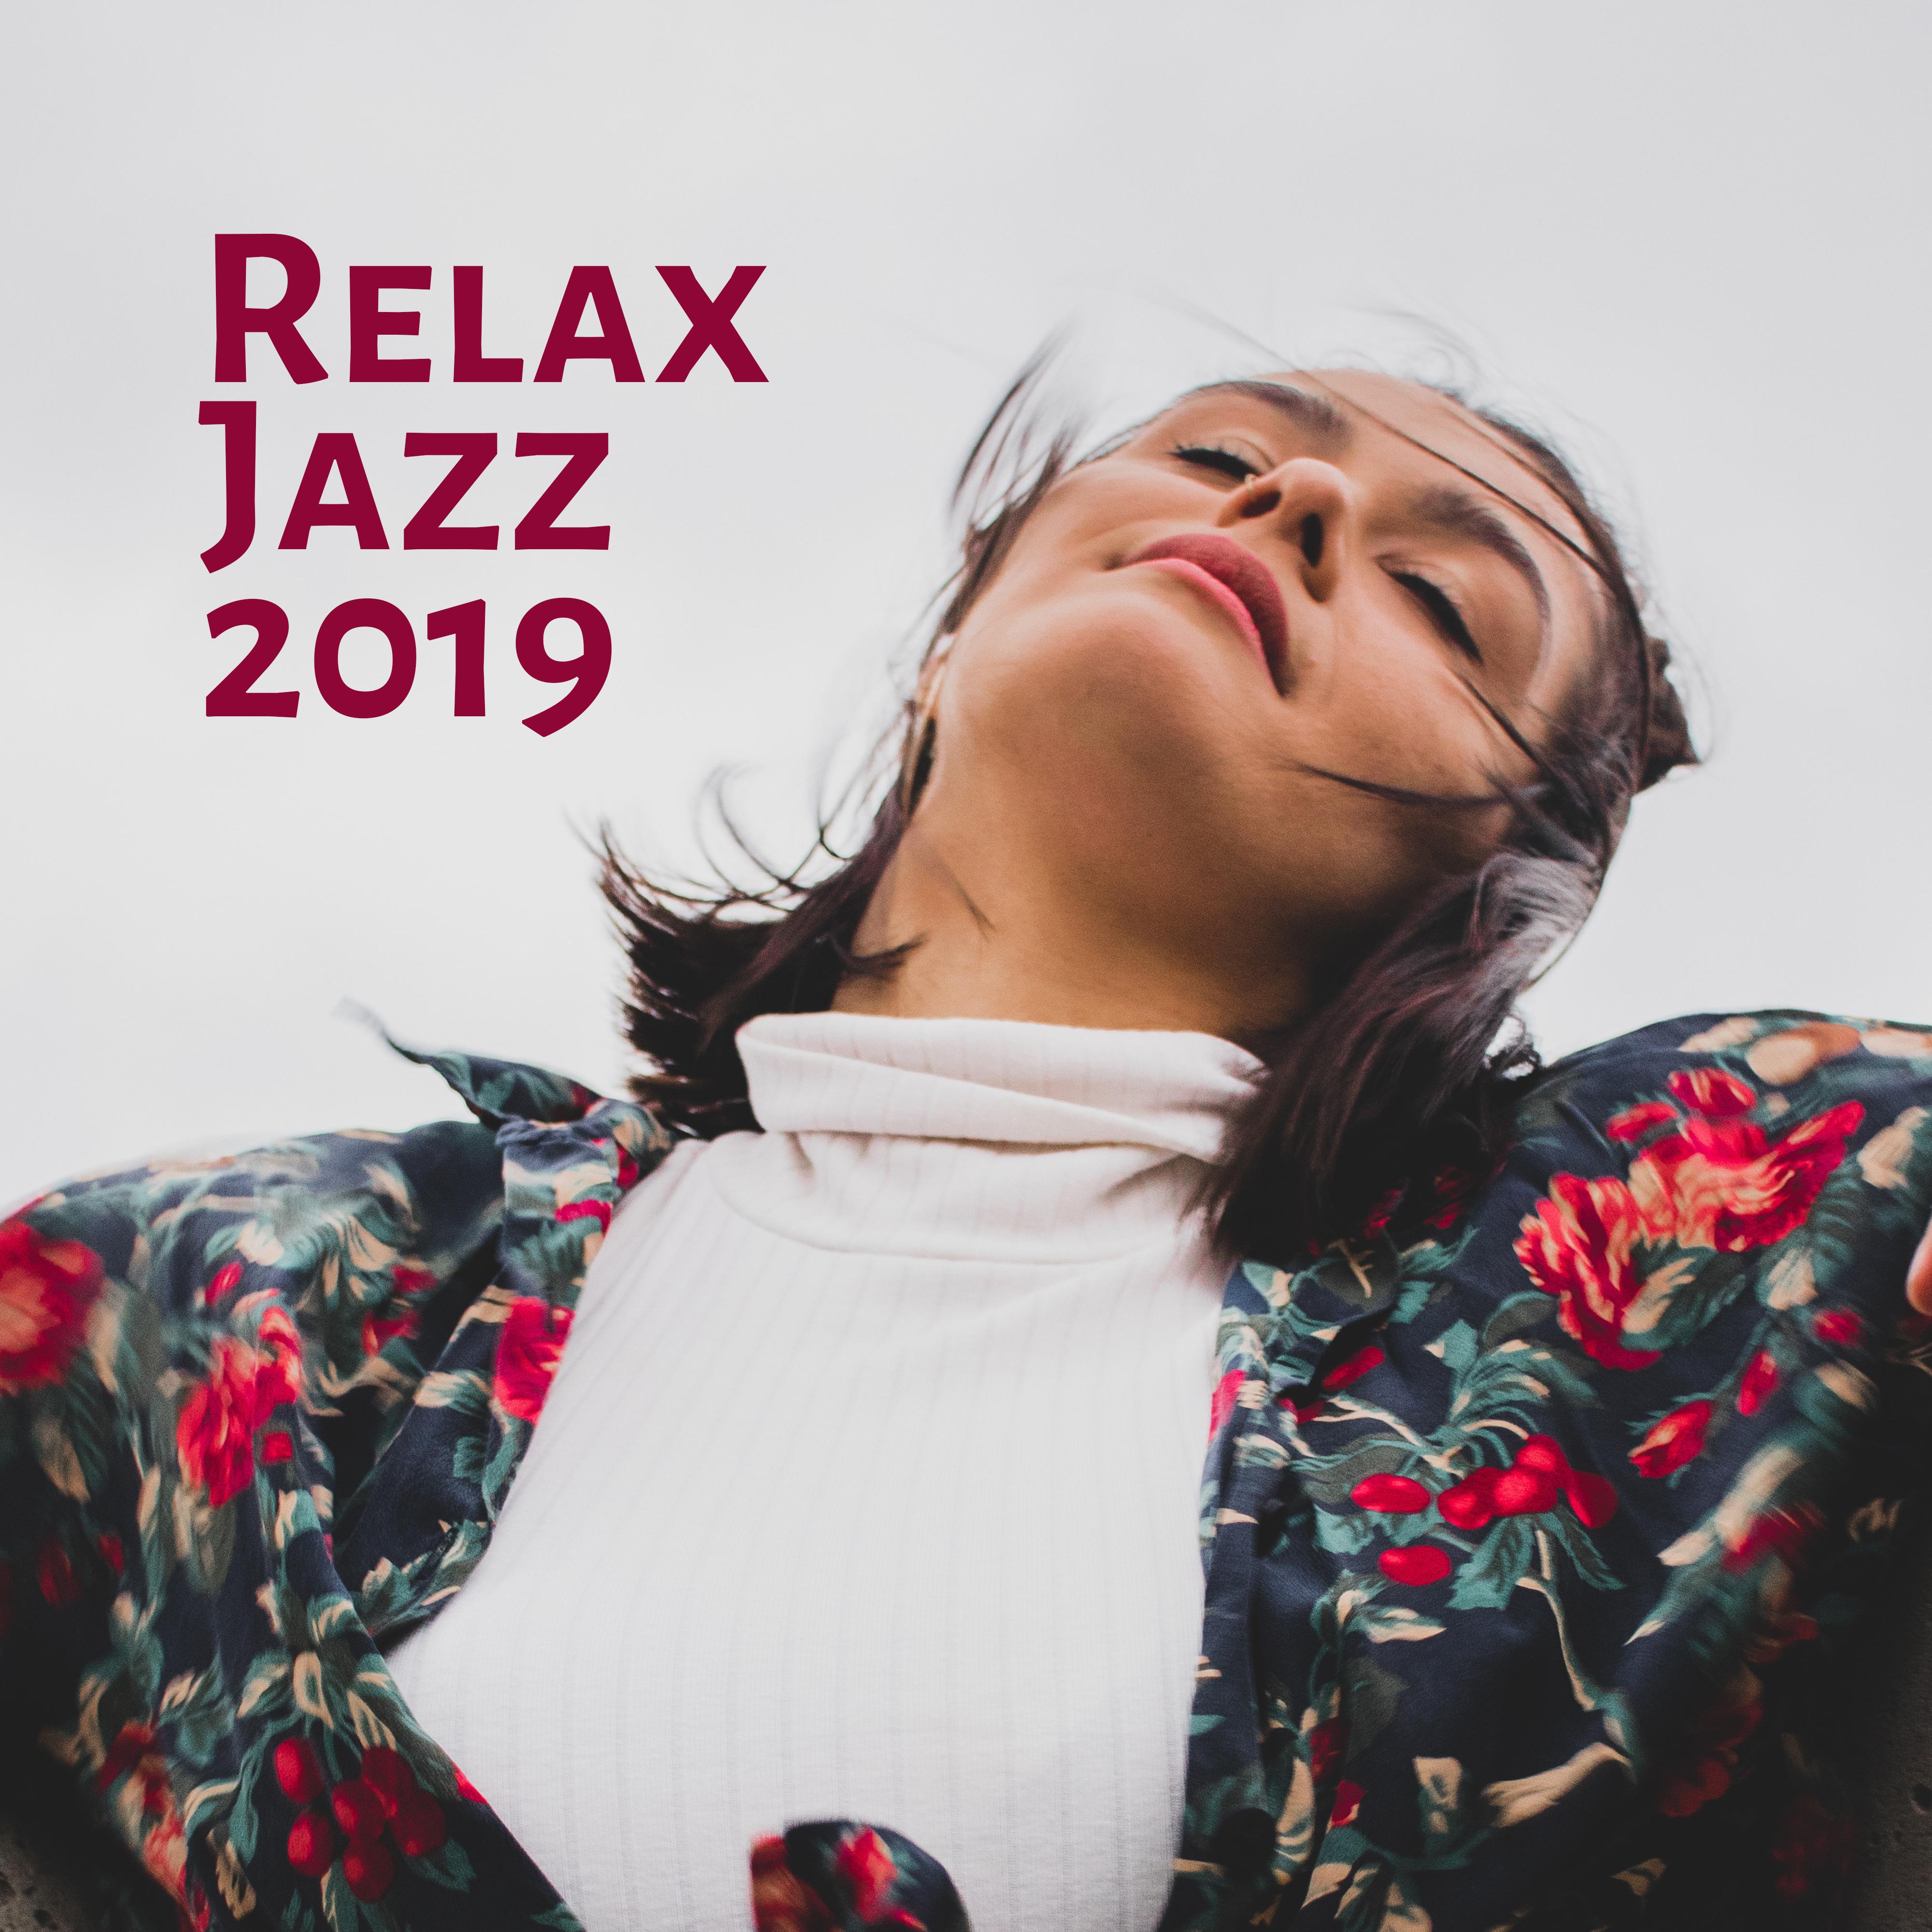 Relax Jazz 2019 - Smooth Restaurant Music, Jazz Coffee, Gentle Soft Jazz, Soft Jazz Mix, Relax, Calm Down, Instrumental Jazz Music Ambient